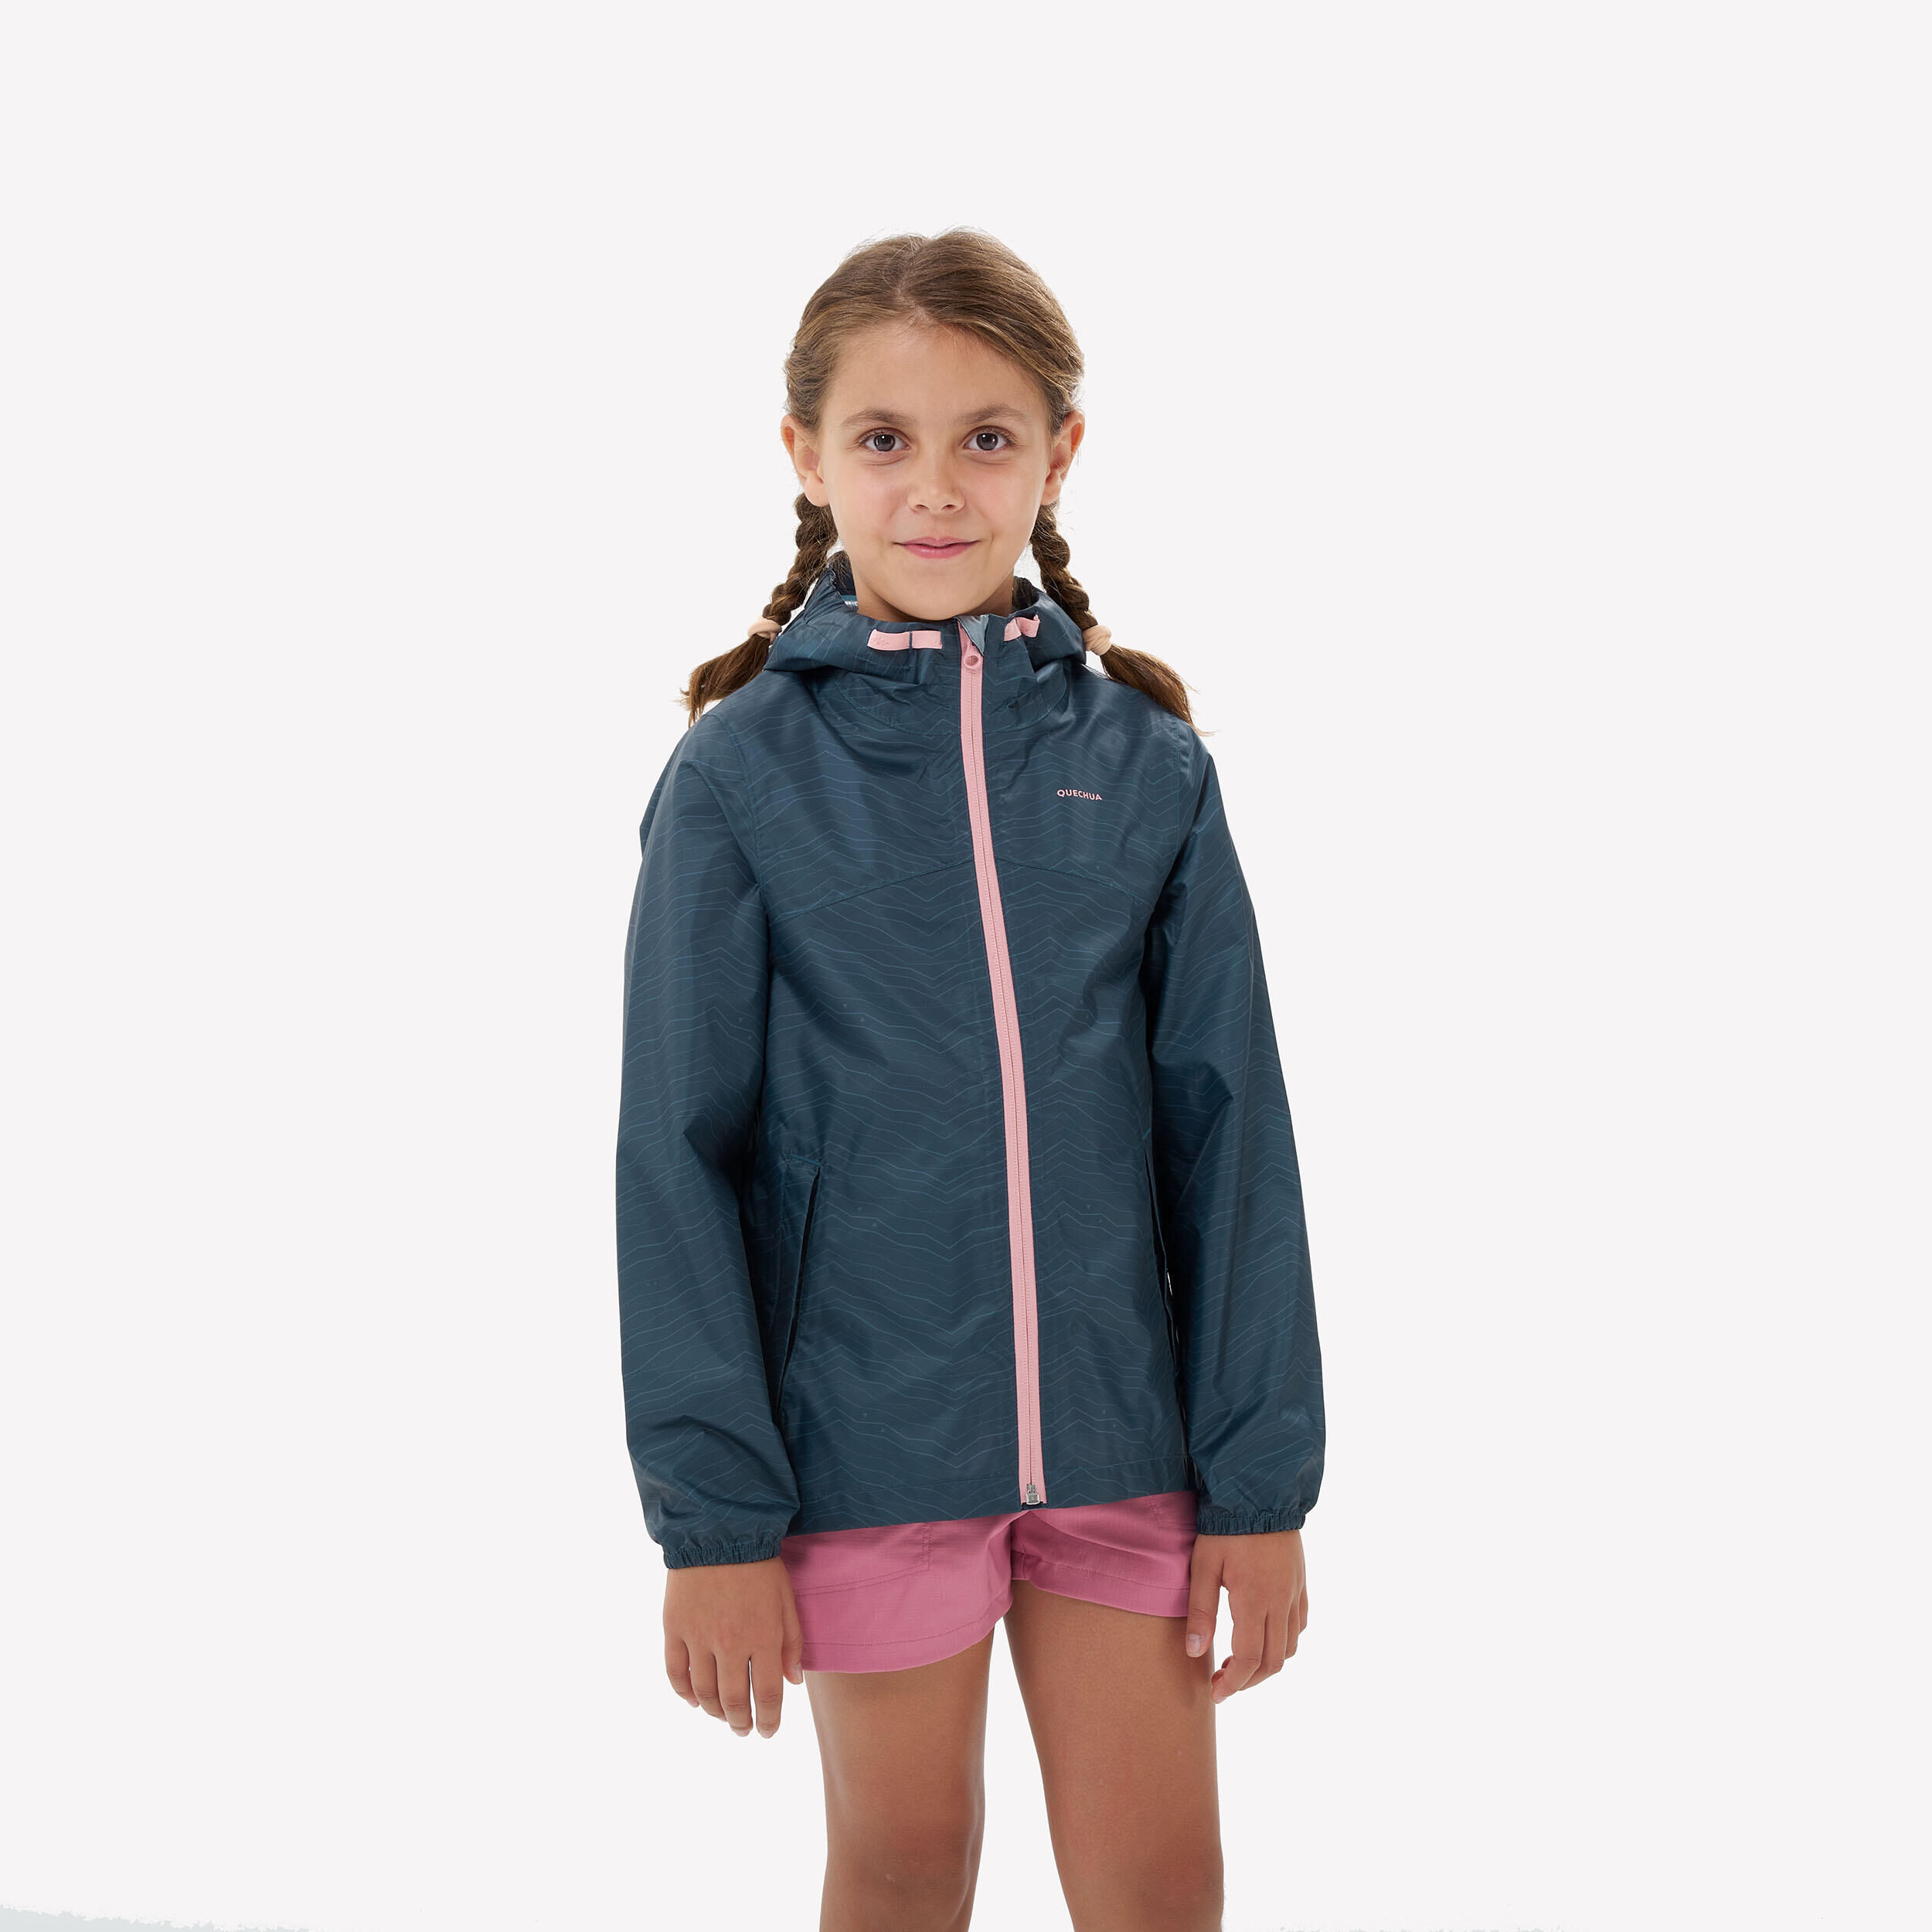 QUECHUA Waterproof Hiking Jacket - MH100 Zip - Child 7-15 years